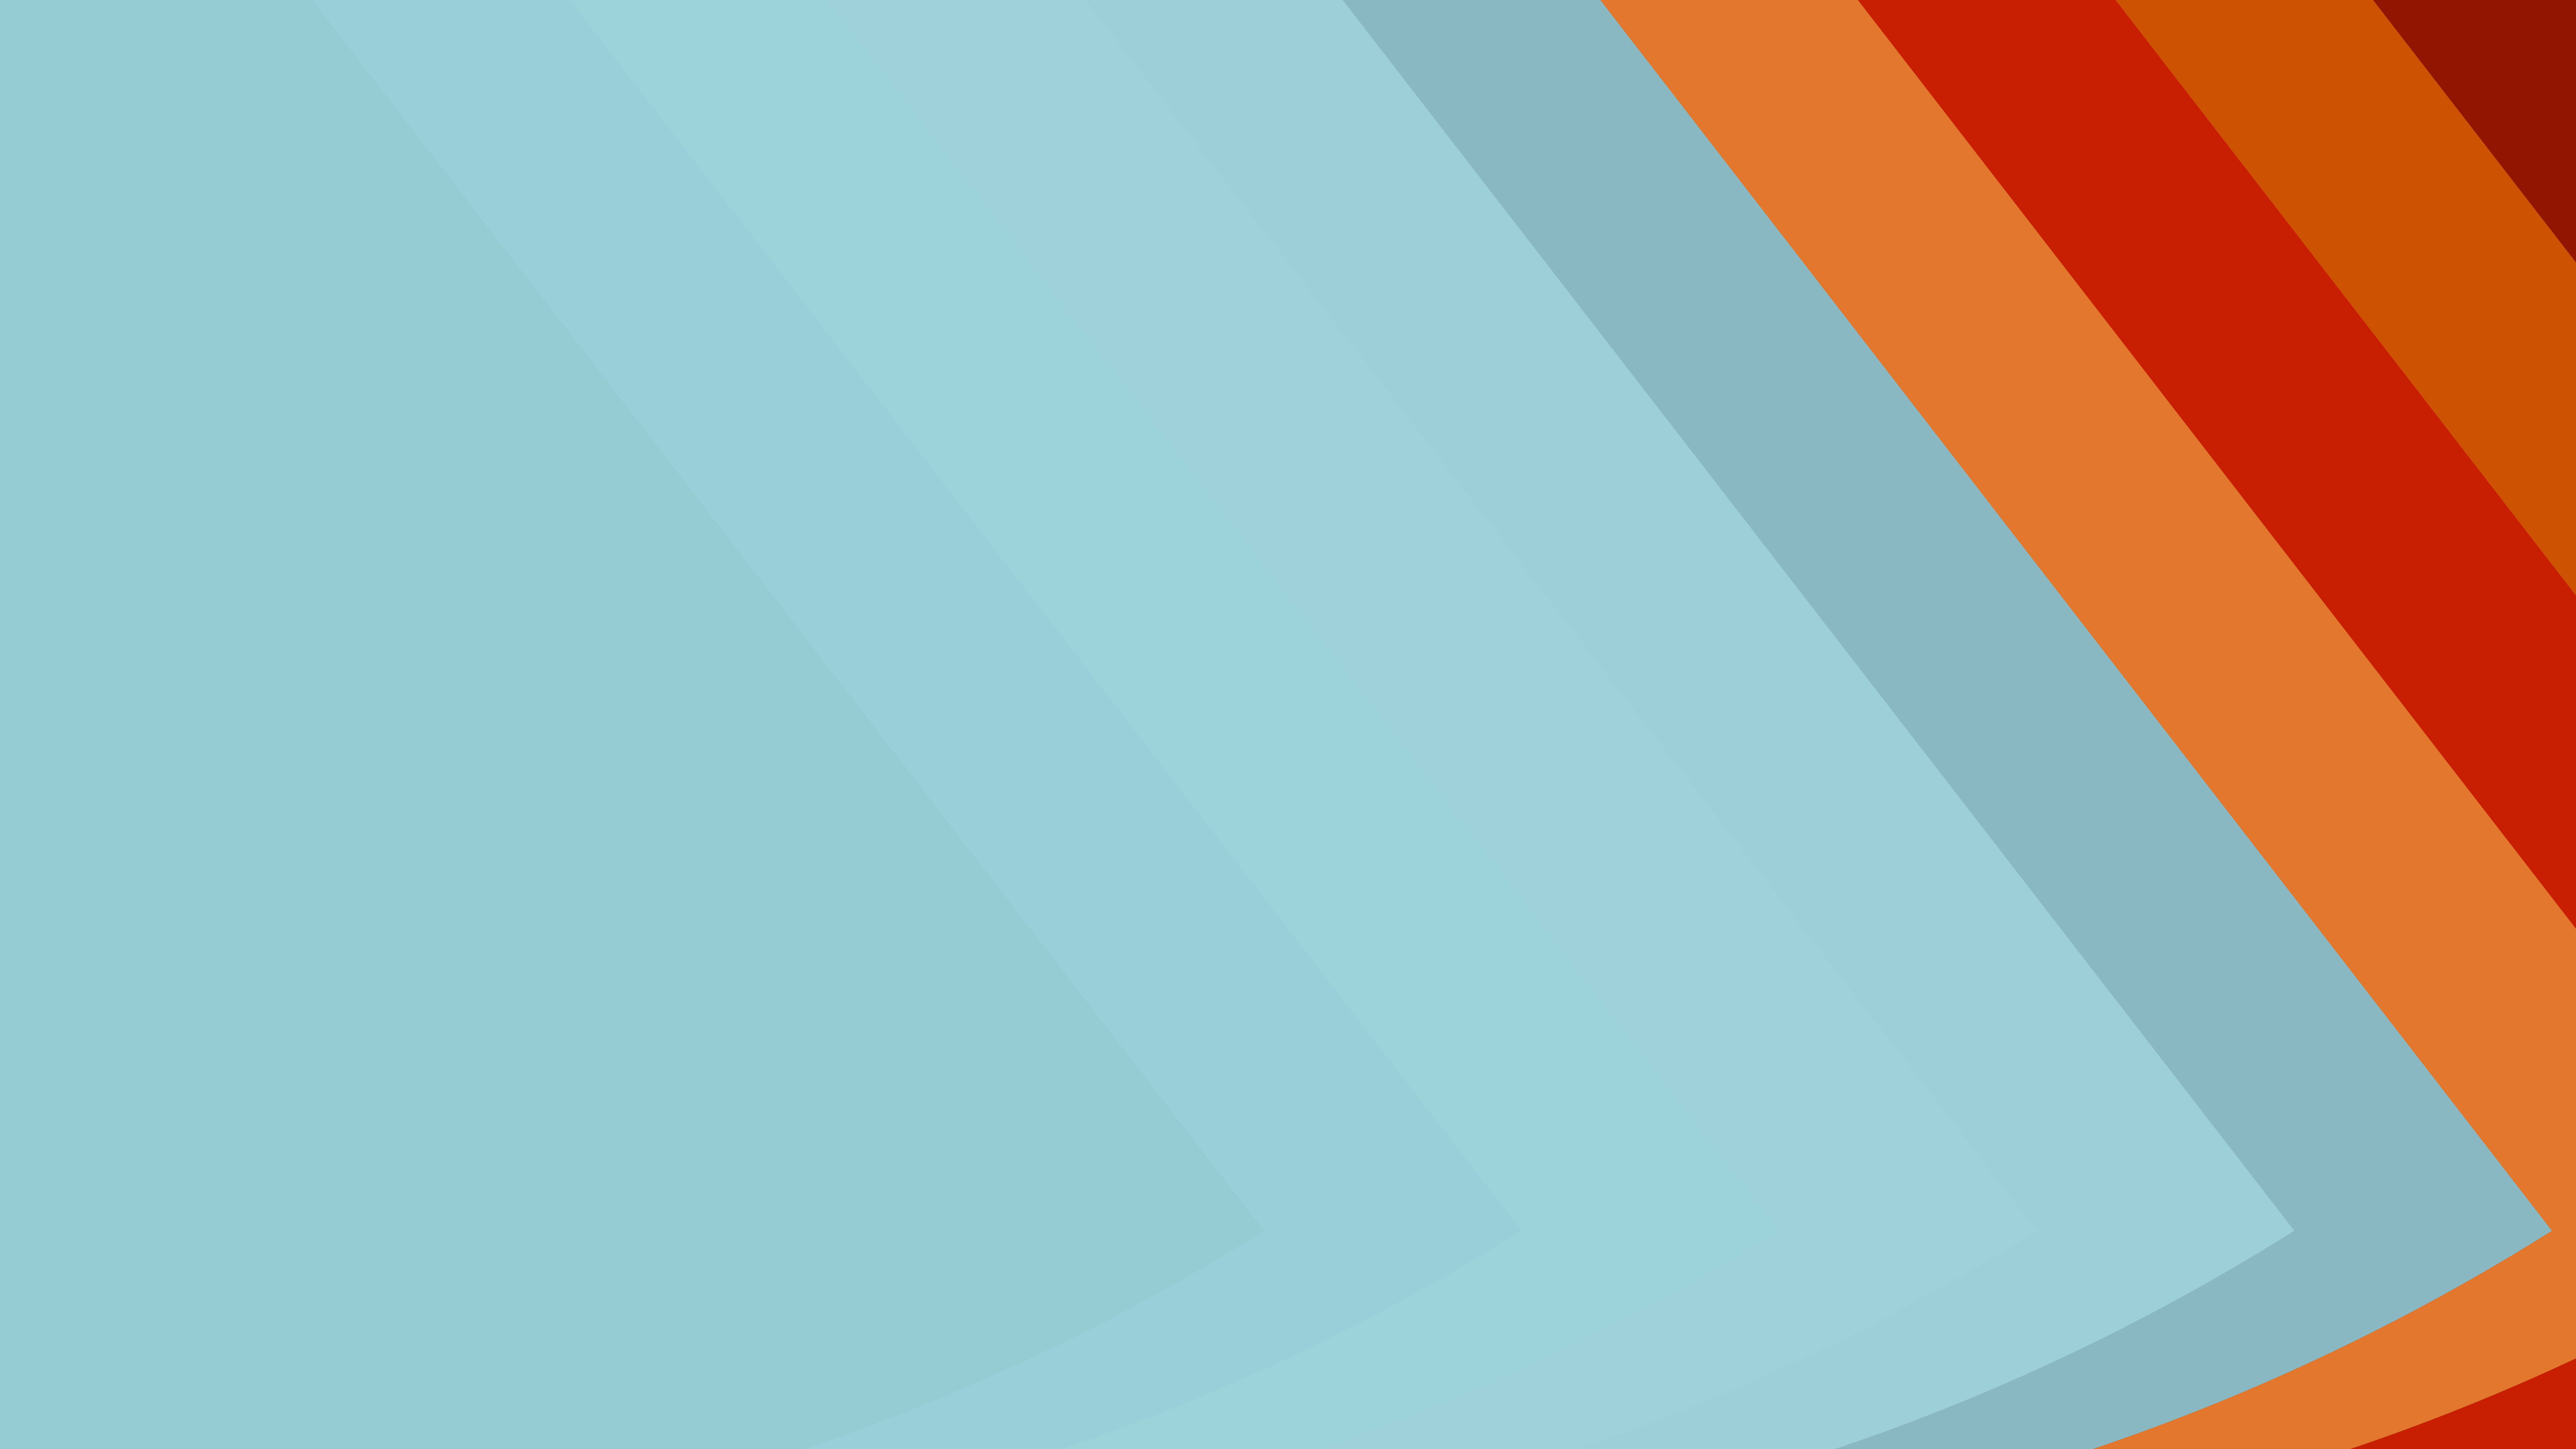 Blue And Orange Geometric Shapes Background Vector